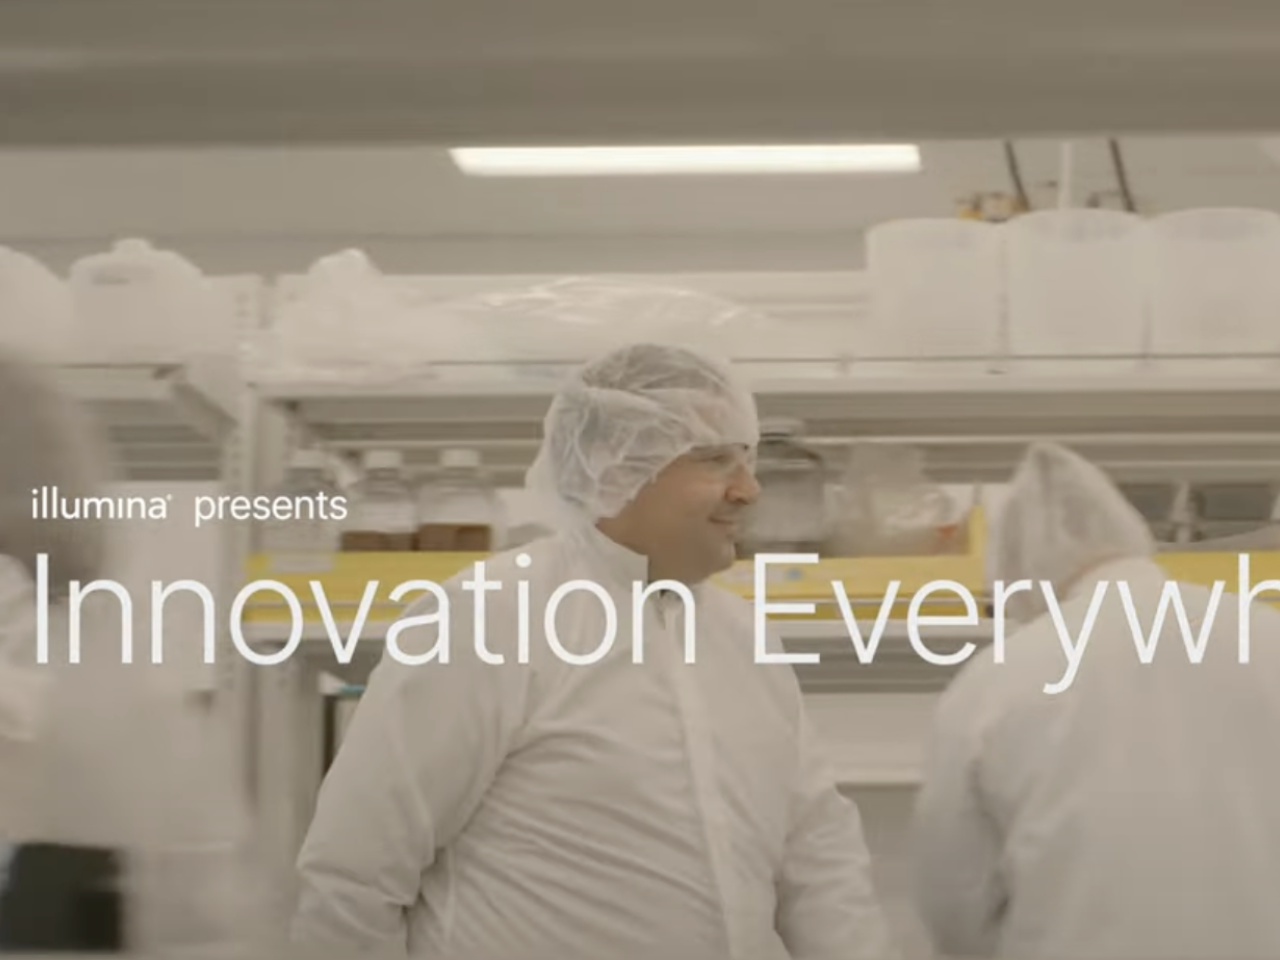 Illumina presents: Innovation Everywhere